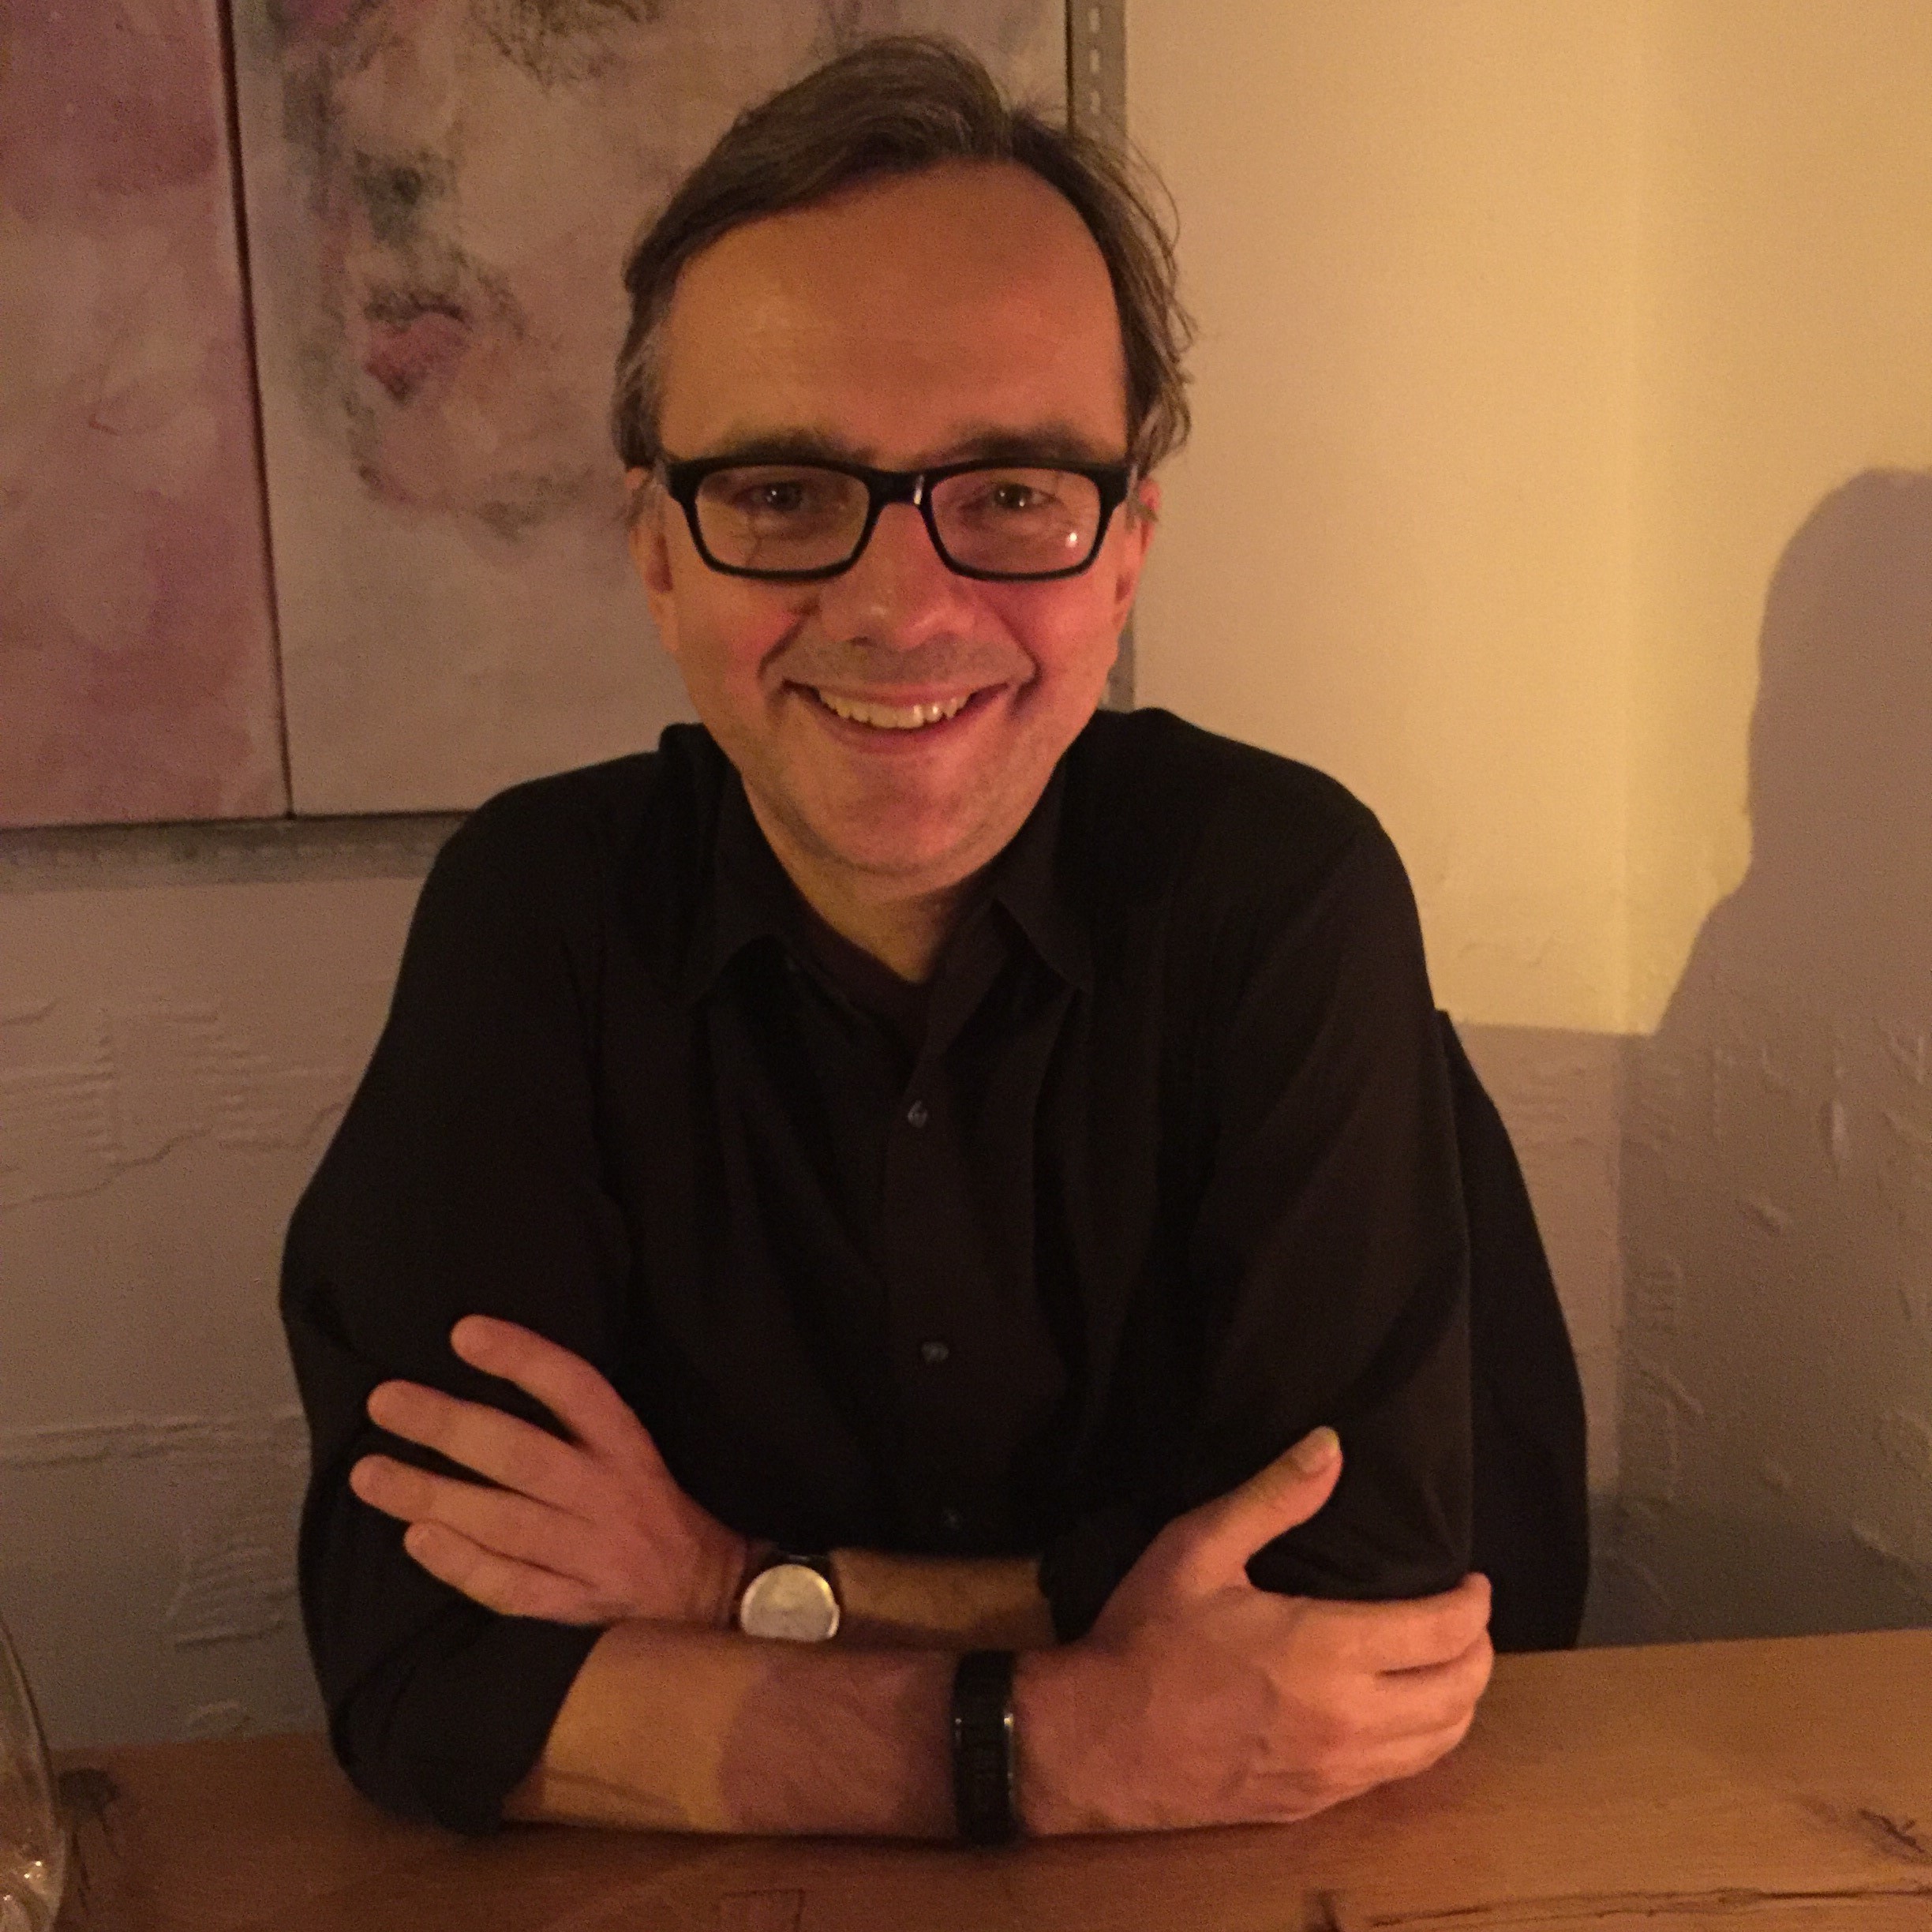 Chester Jankowski visiting Lokal restaurant in Berlin, Germany, 2018.